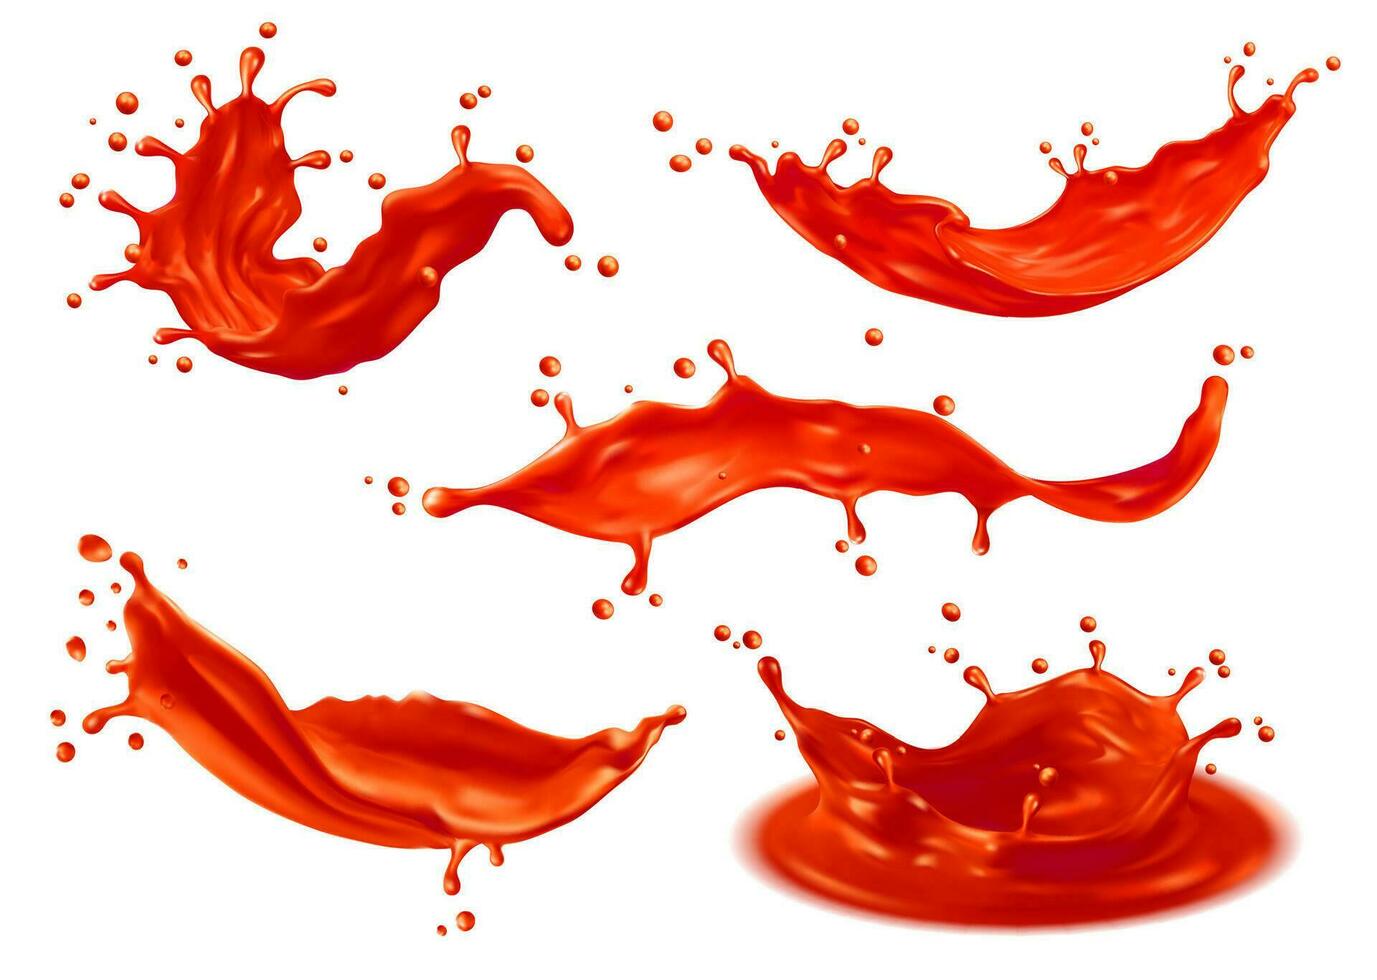 Tomato ketchup sauce splashes, red liquid juice vector